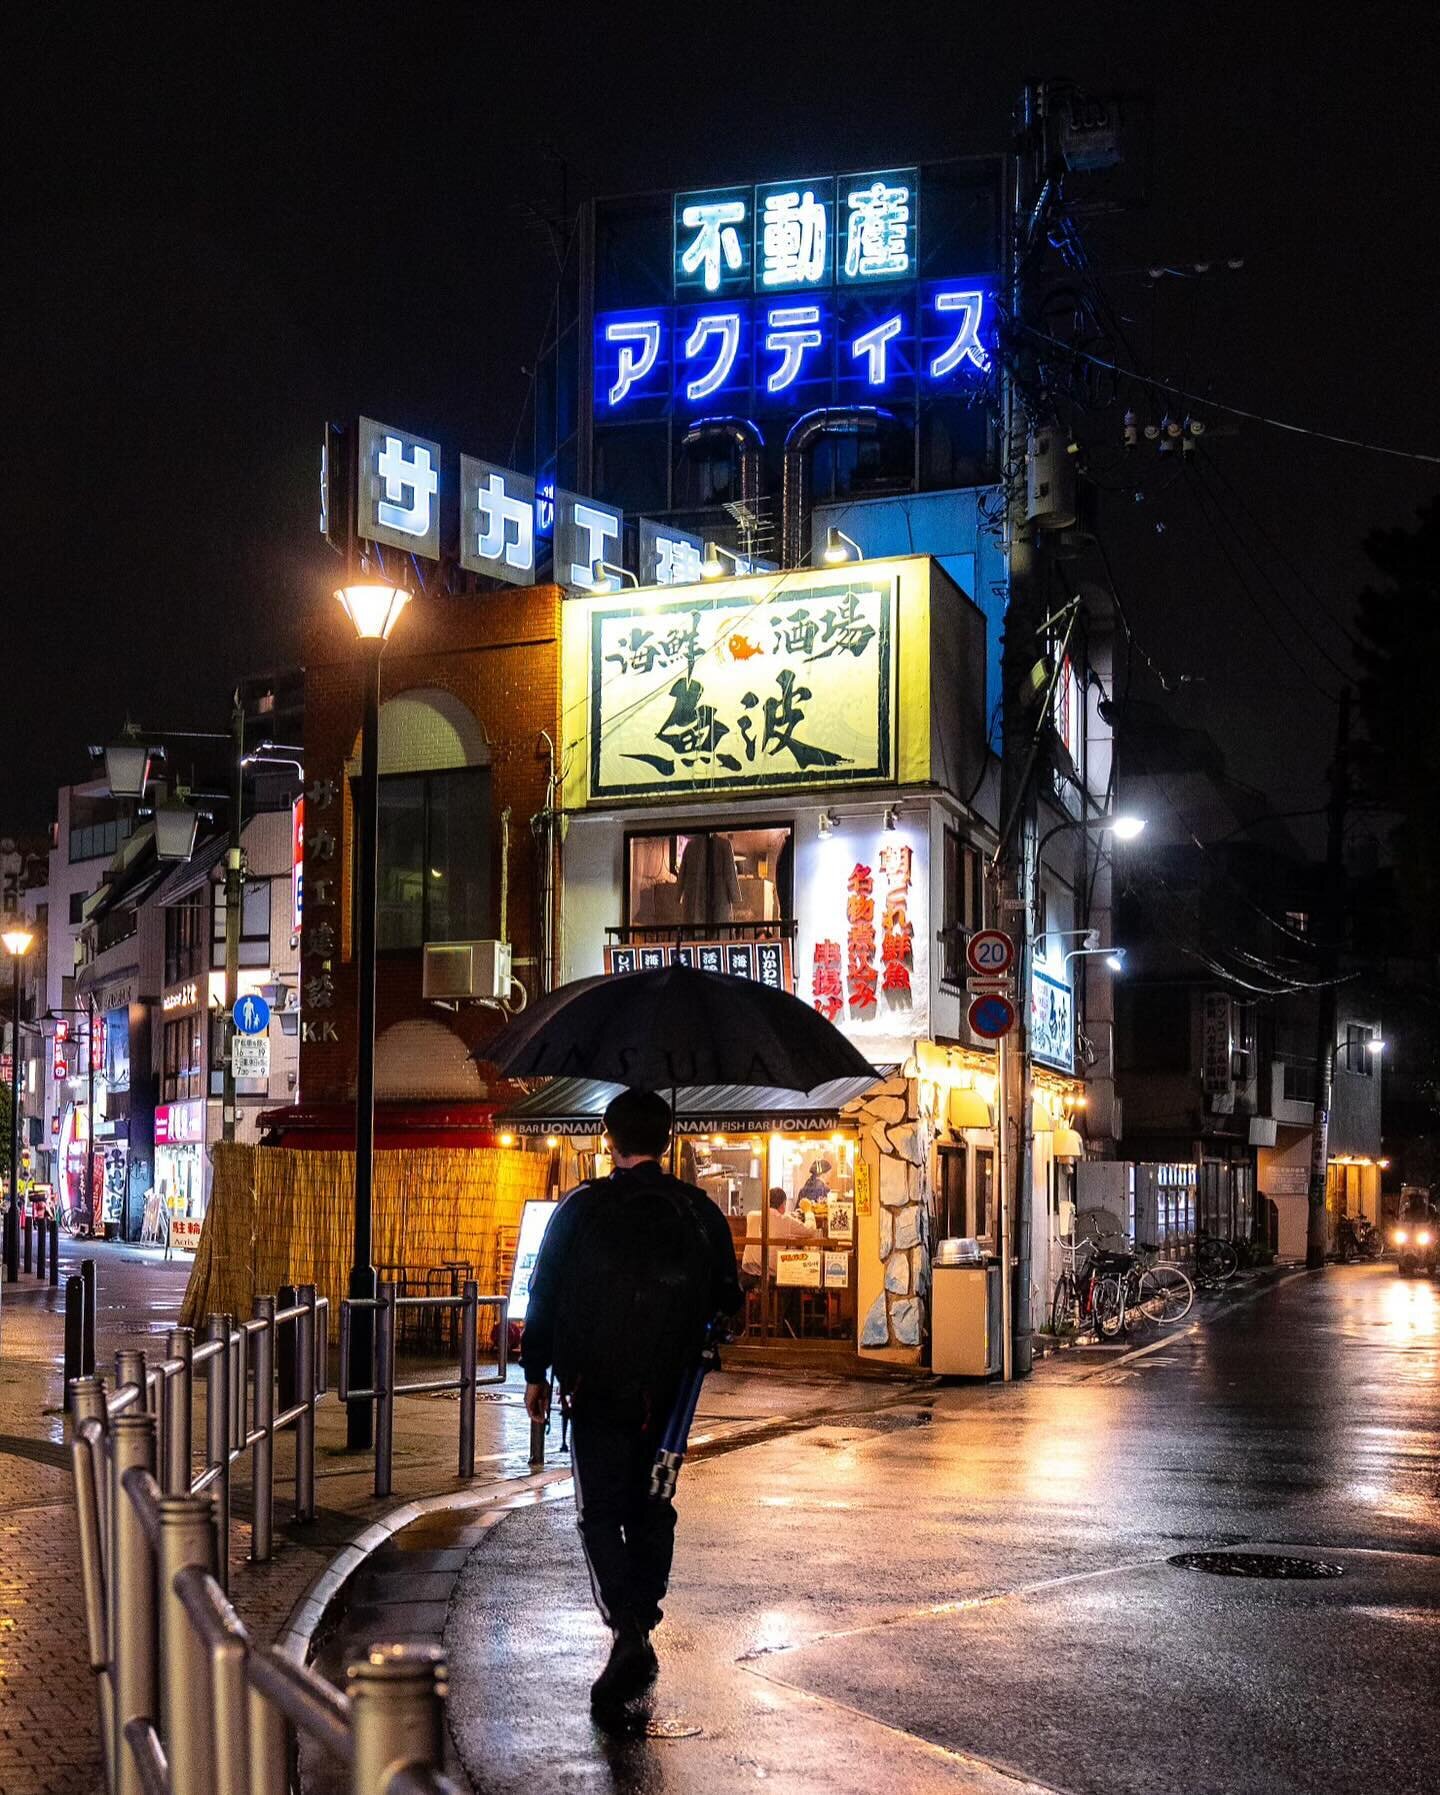 Rainy nights in Tokyo ☔️ 
&bull;
#visitjapanjp #japantrip #japanphoto #japanlife #japanlover #japanphotography #japantravelphoto #japan_of_insta #japan_photo_now #japan_night_view #japan_great_view #japanawaits #traveljapan #explorejapan #citylights 